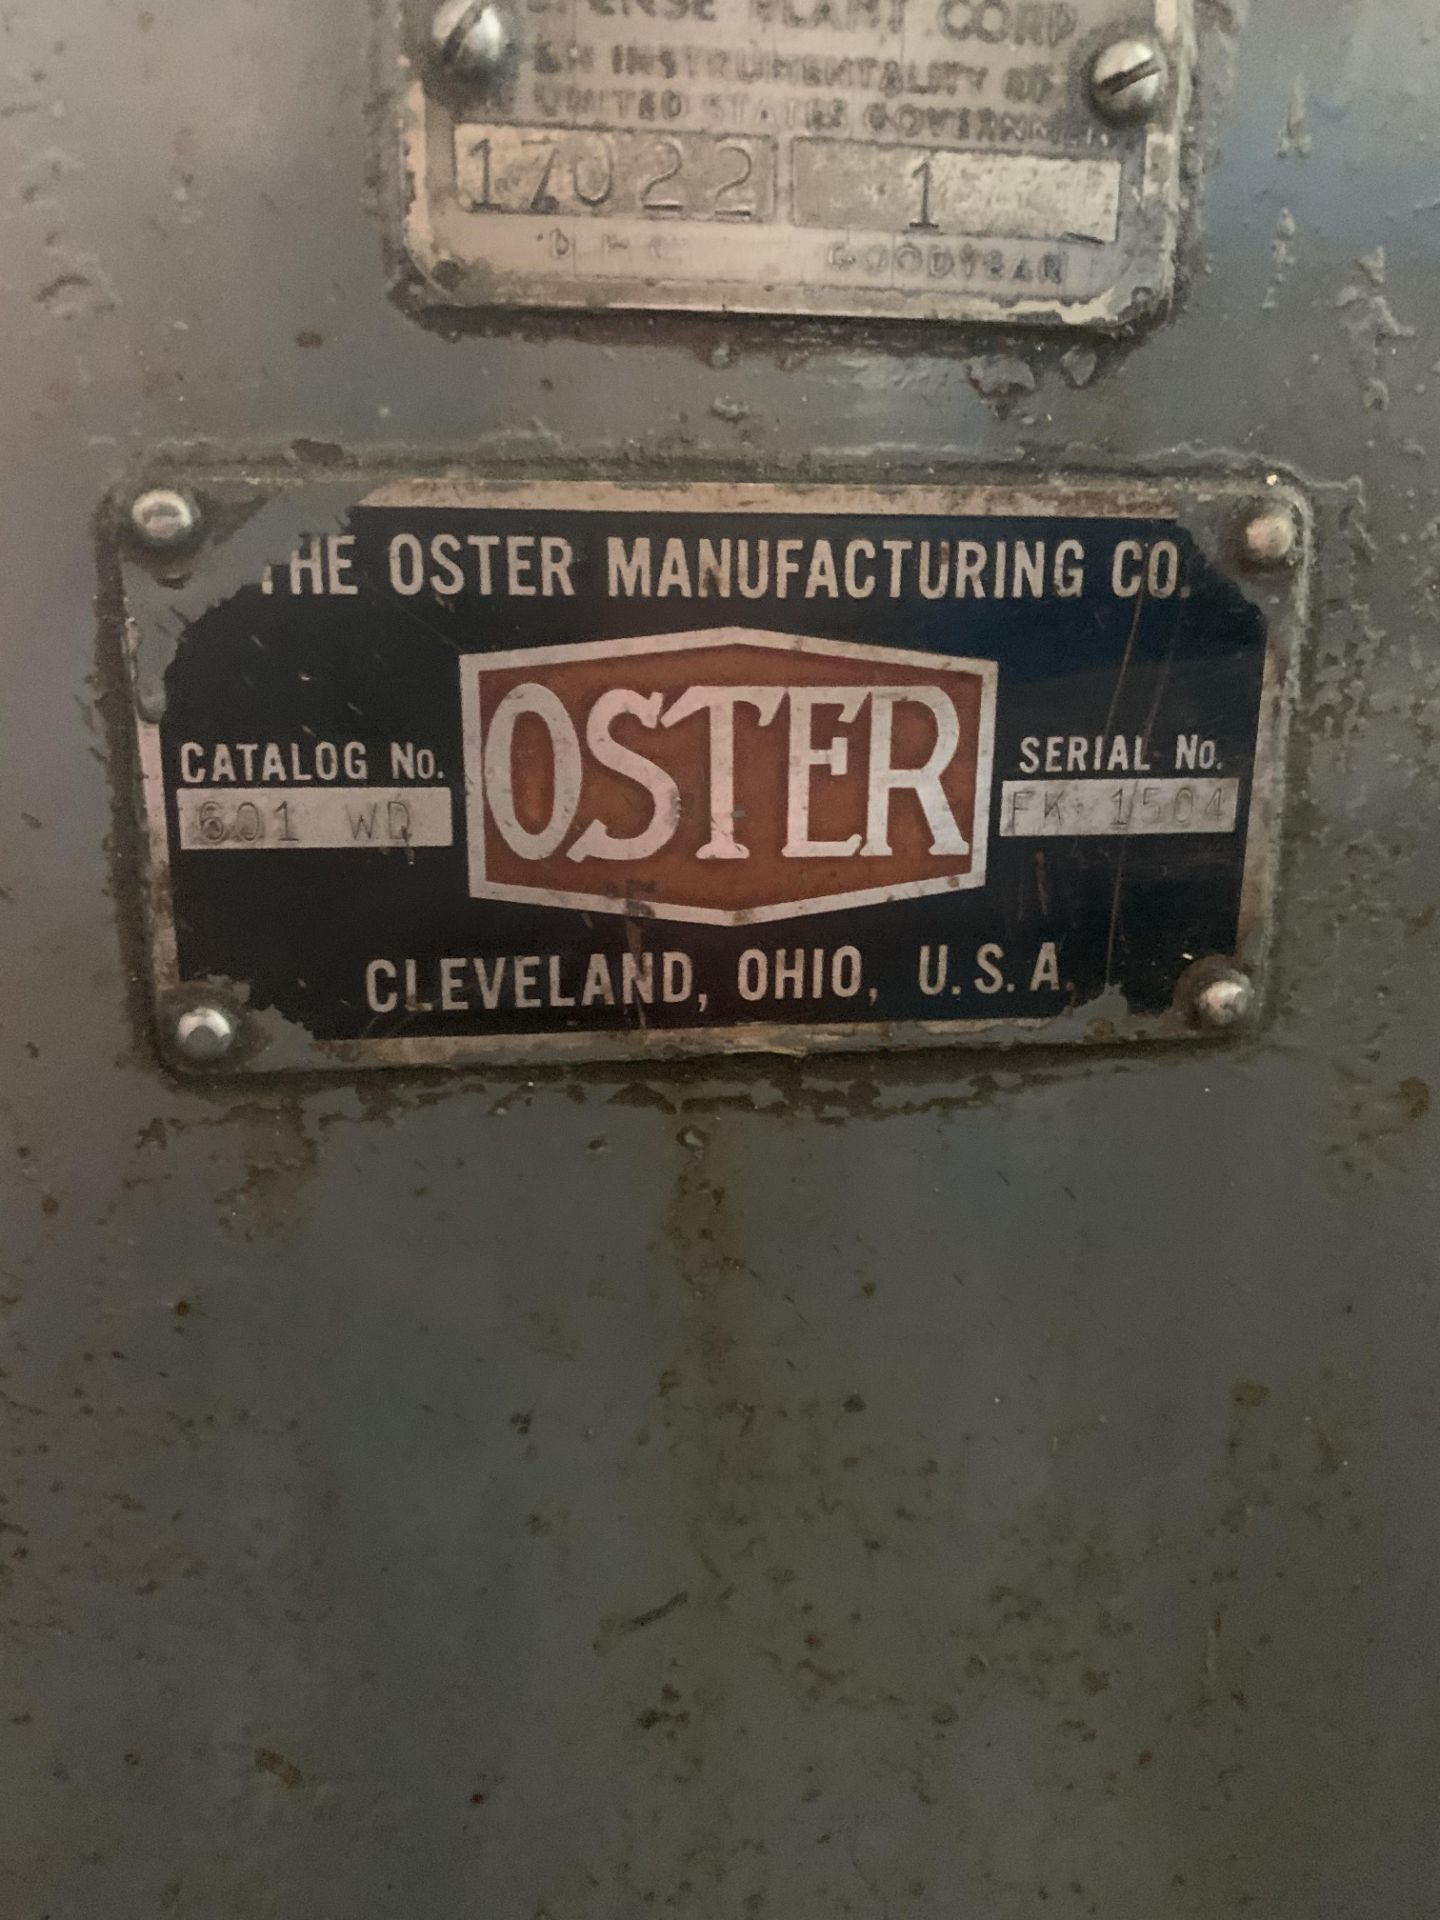 Oster turet lathe catalog # 601WD; serial number FK1504; uses Warner Swasey dead stop collet pads; - Image 4 of 15